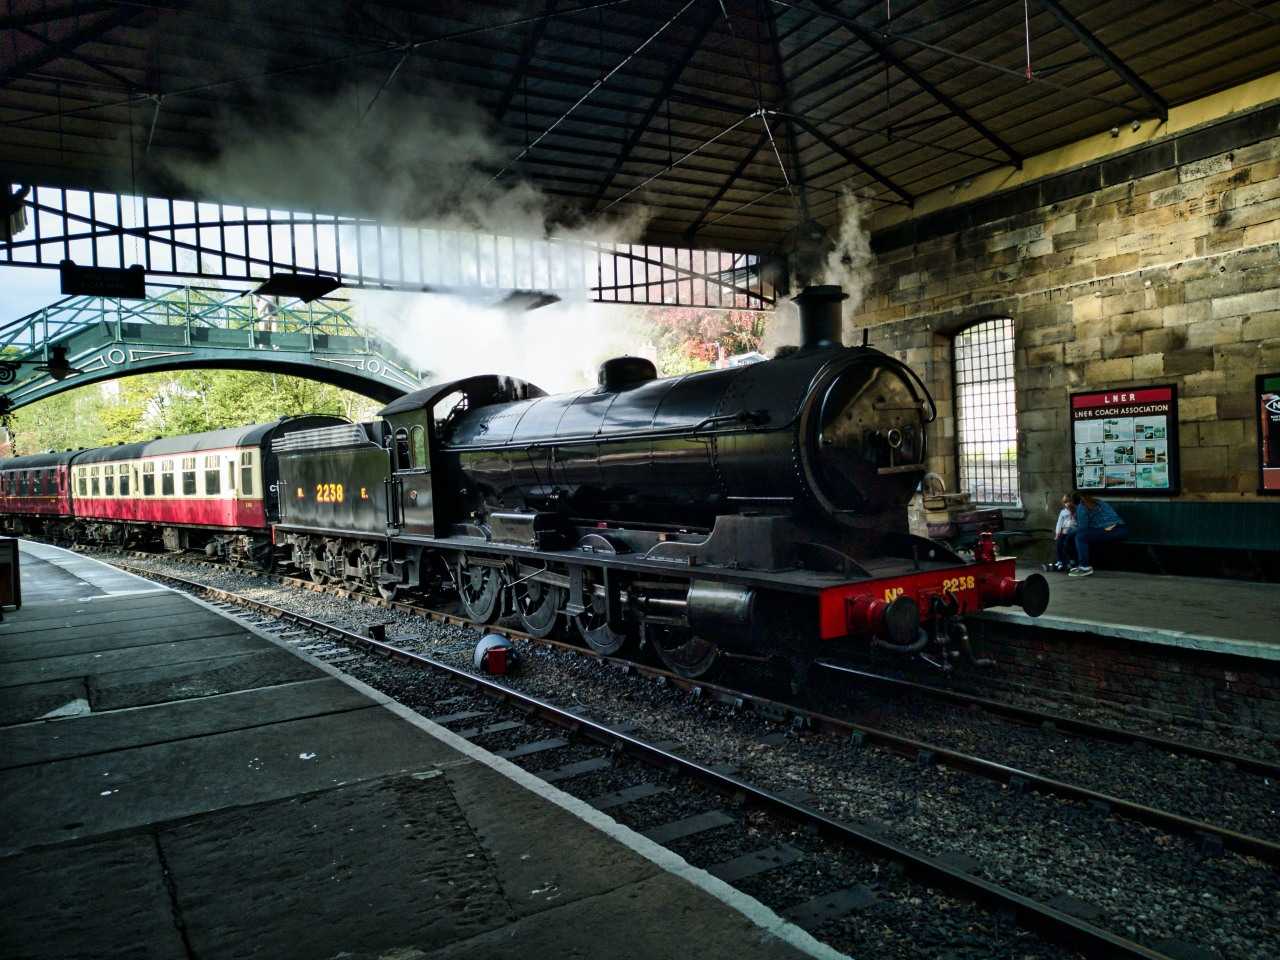 Pickering Station on the North Yorkshire Moors Railway (Lisa Baker on Unsplash)